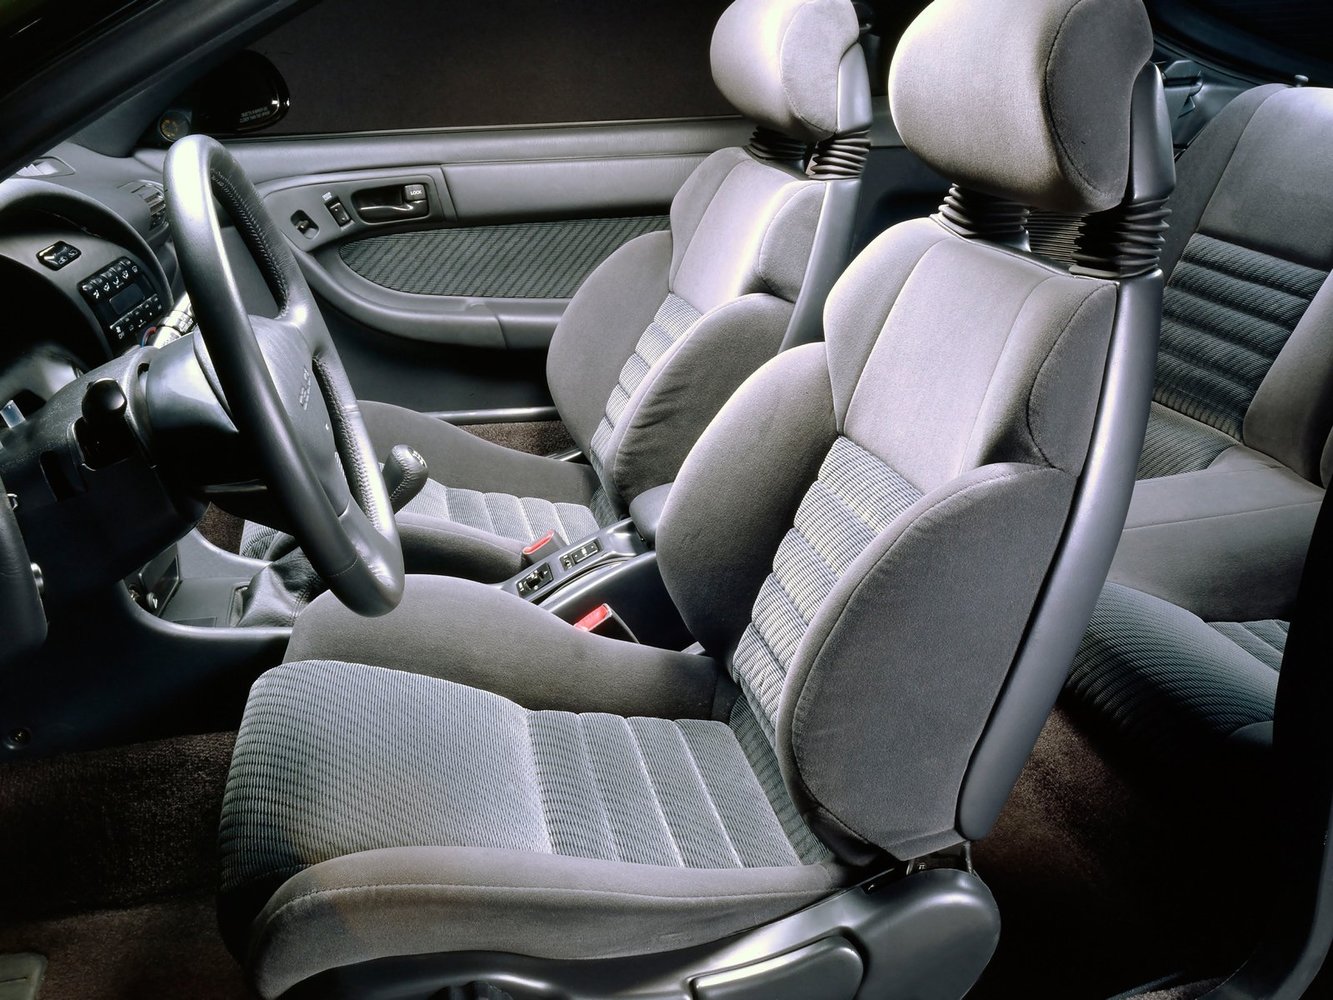 купе Toyota Celica 1989 - 1994г выпуска модификация 1.6 AT (105 л.с.)